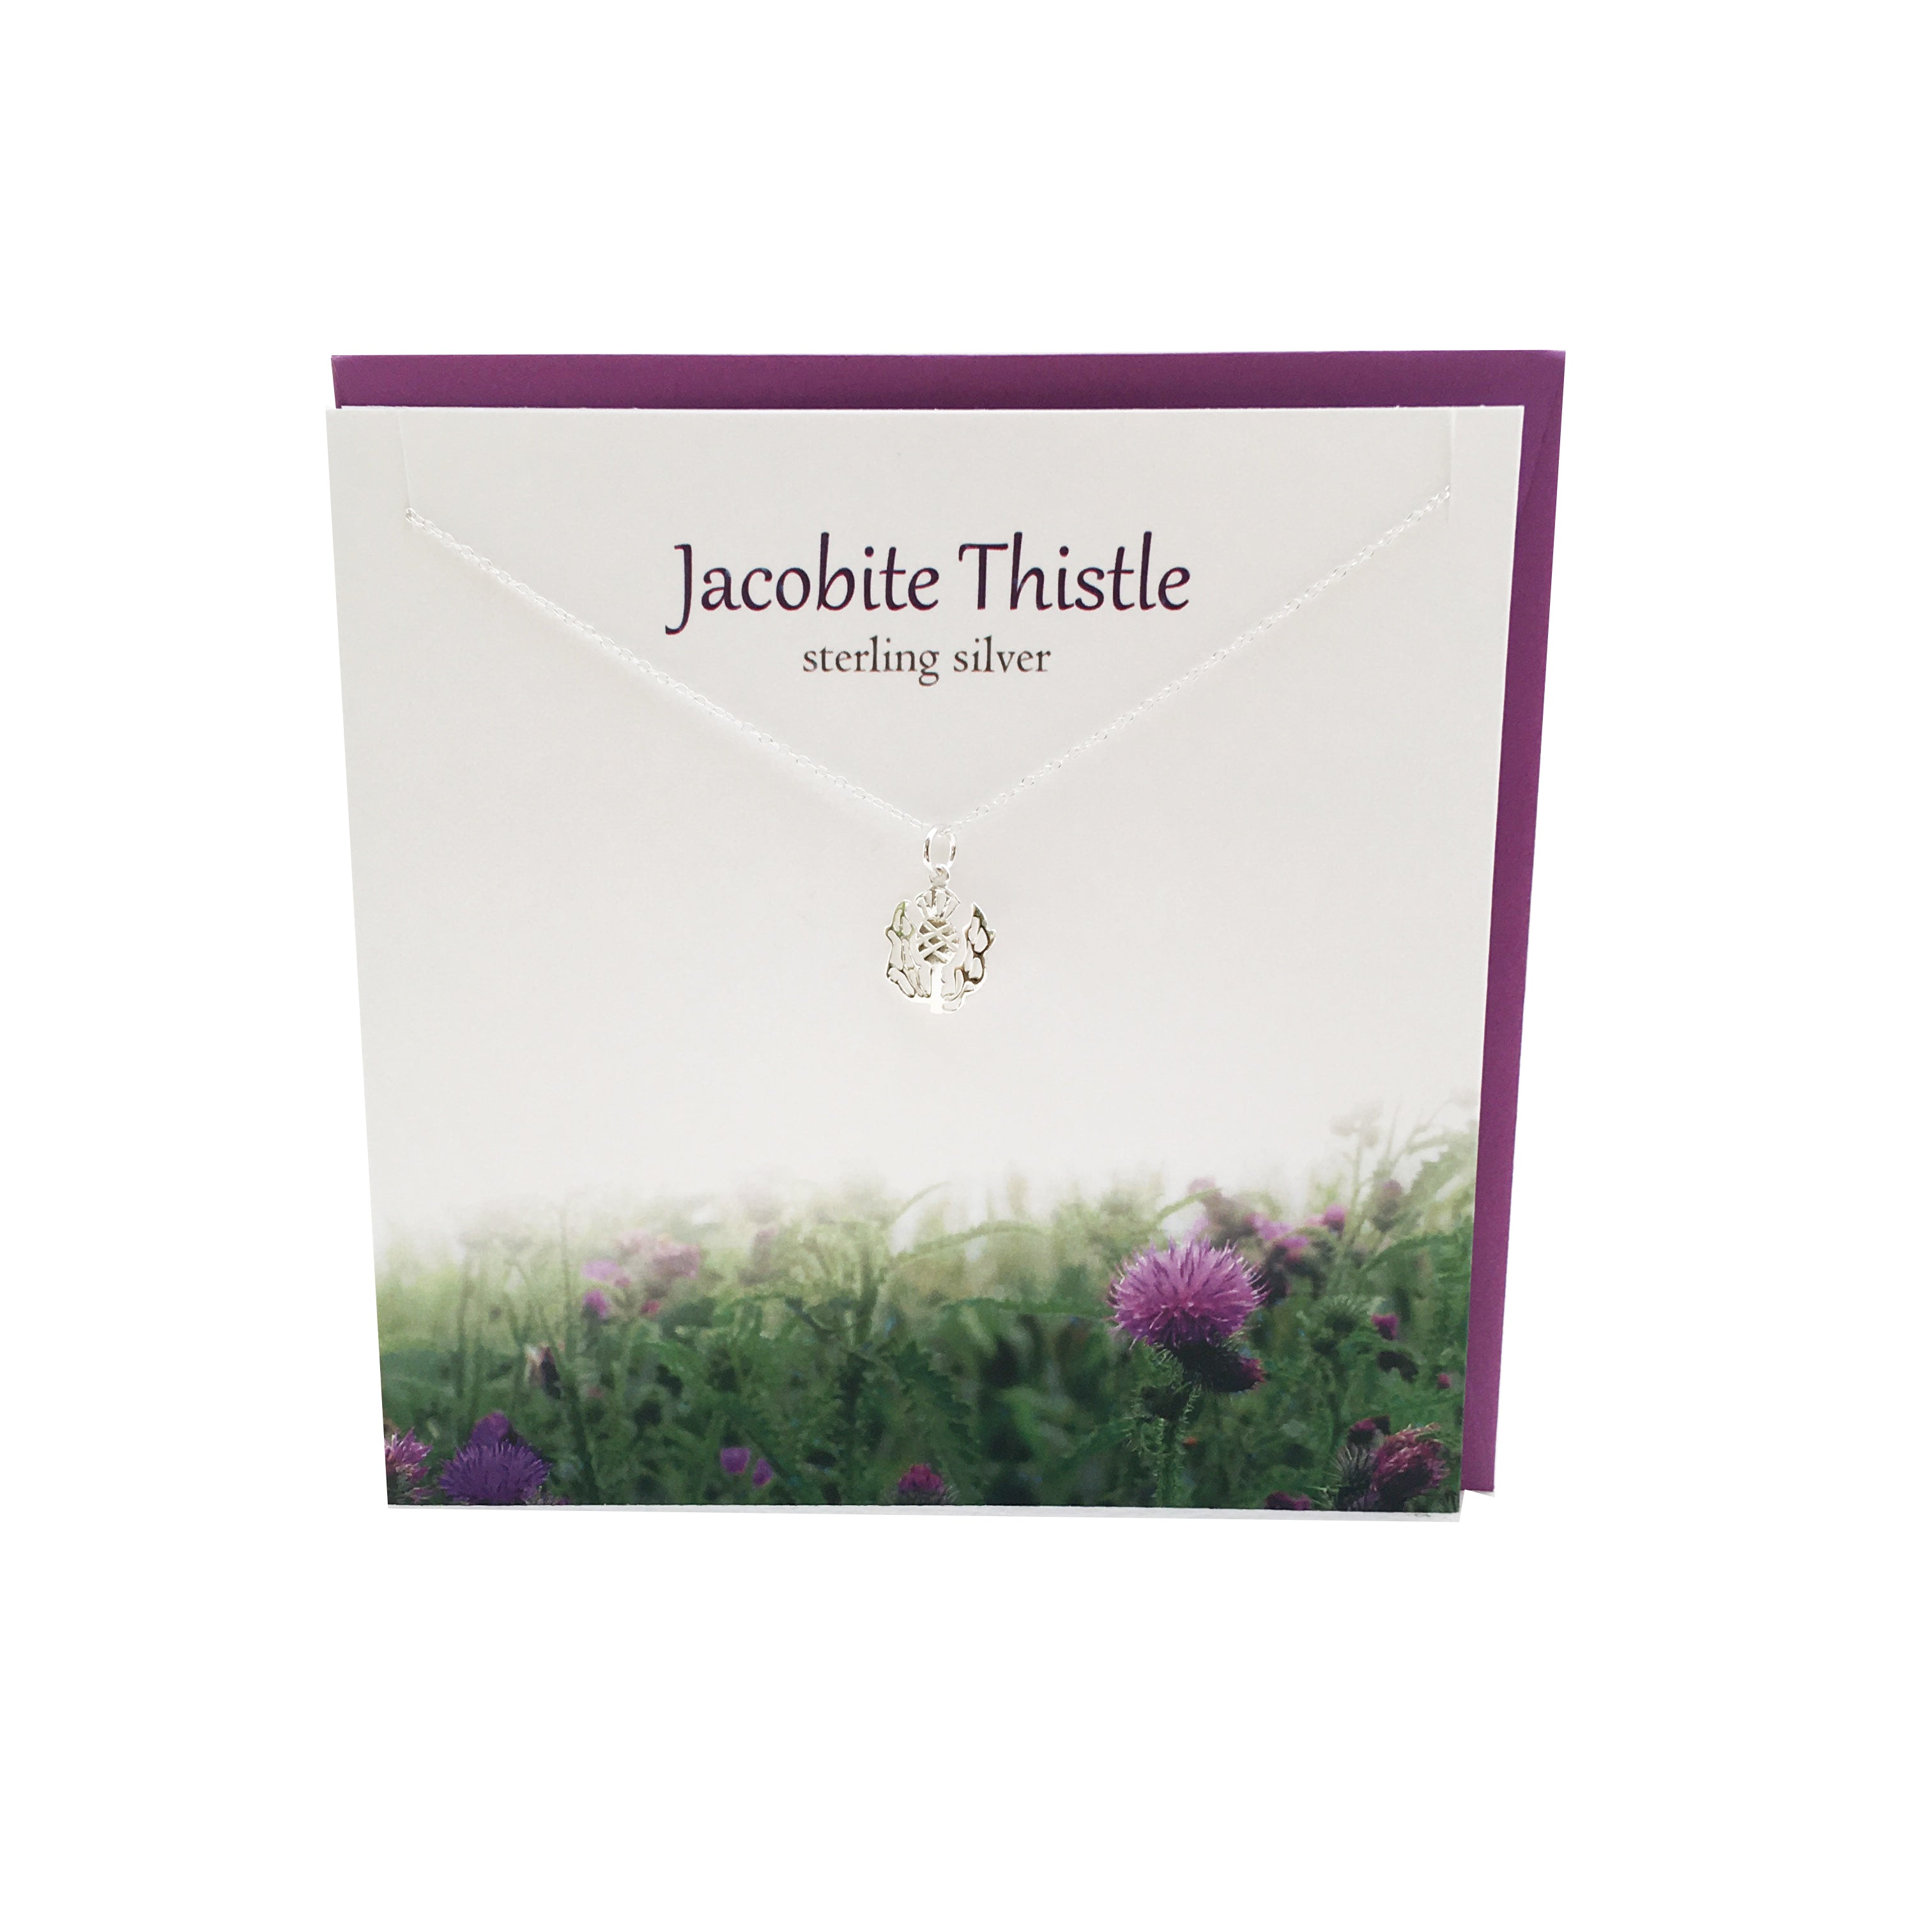 Jacobite Thistle silver pendant | The Silver Studio Scotland